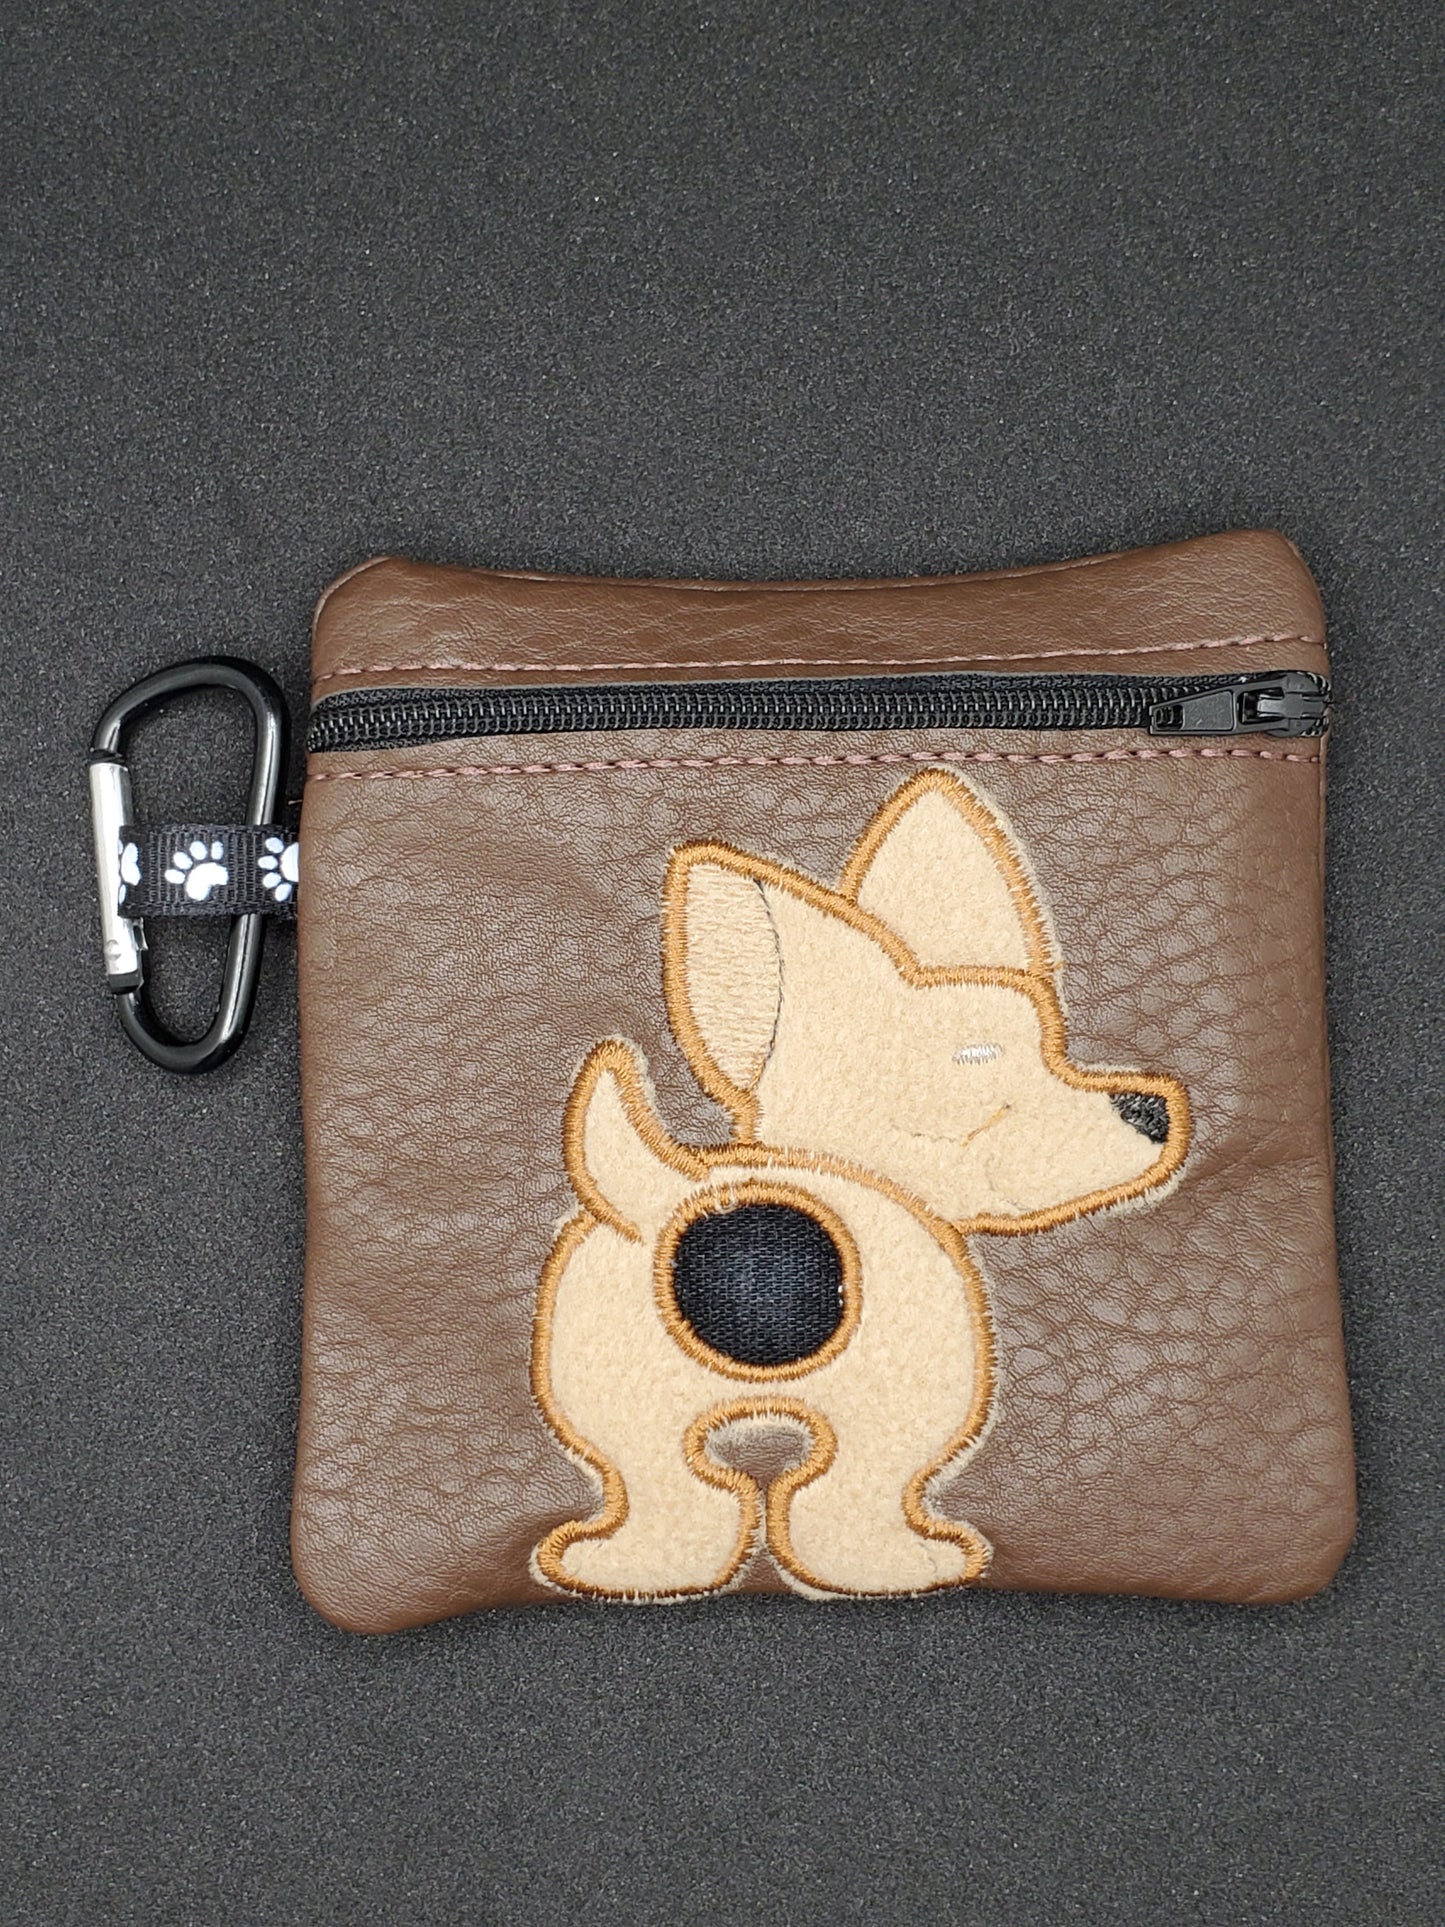 Chihuahua/Tan fleece Dog with dark brown bag- Dog Poo Bag Holder / waste bag holder